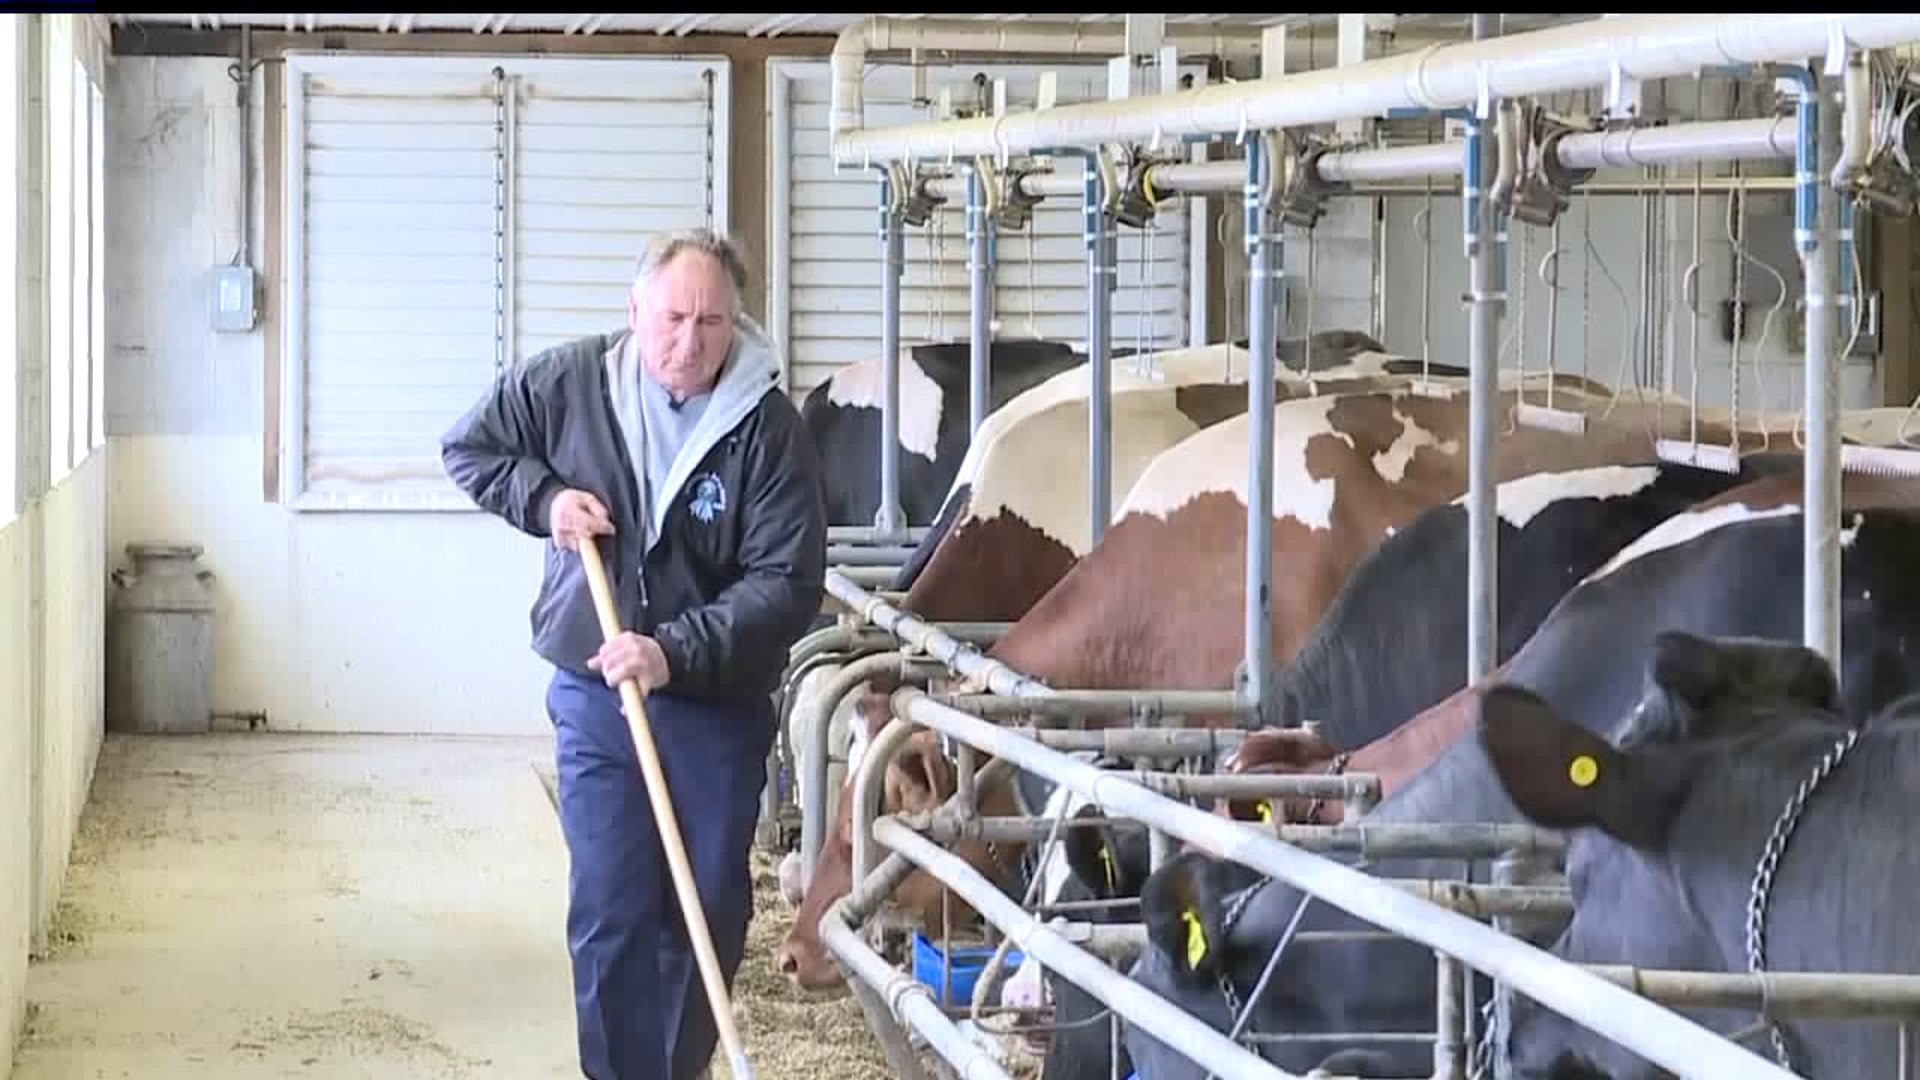 Local dairy farmers losing milk contracts